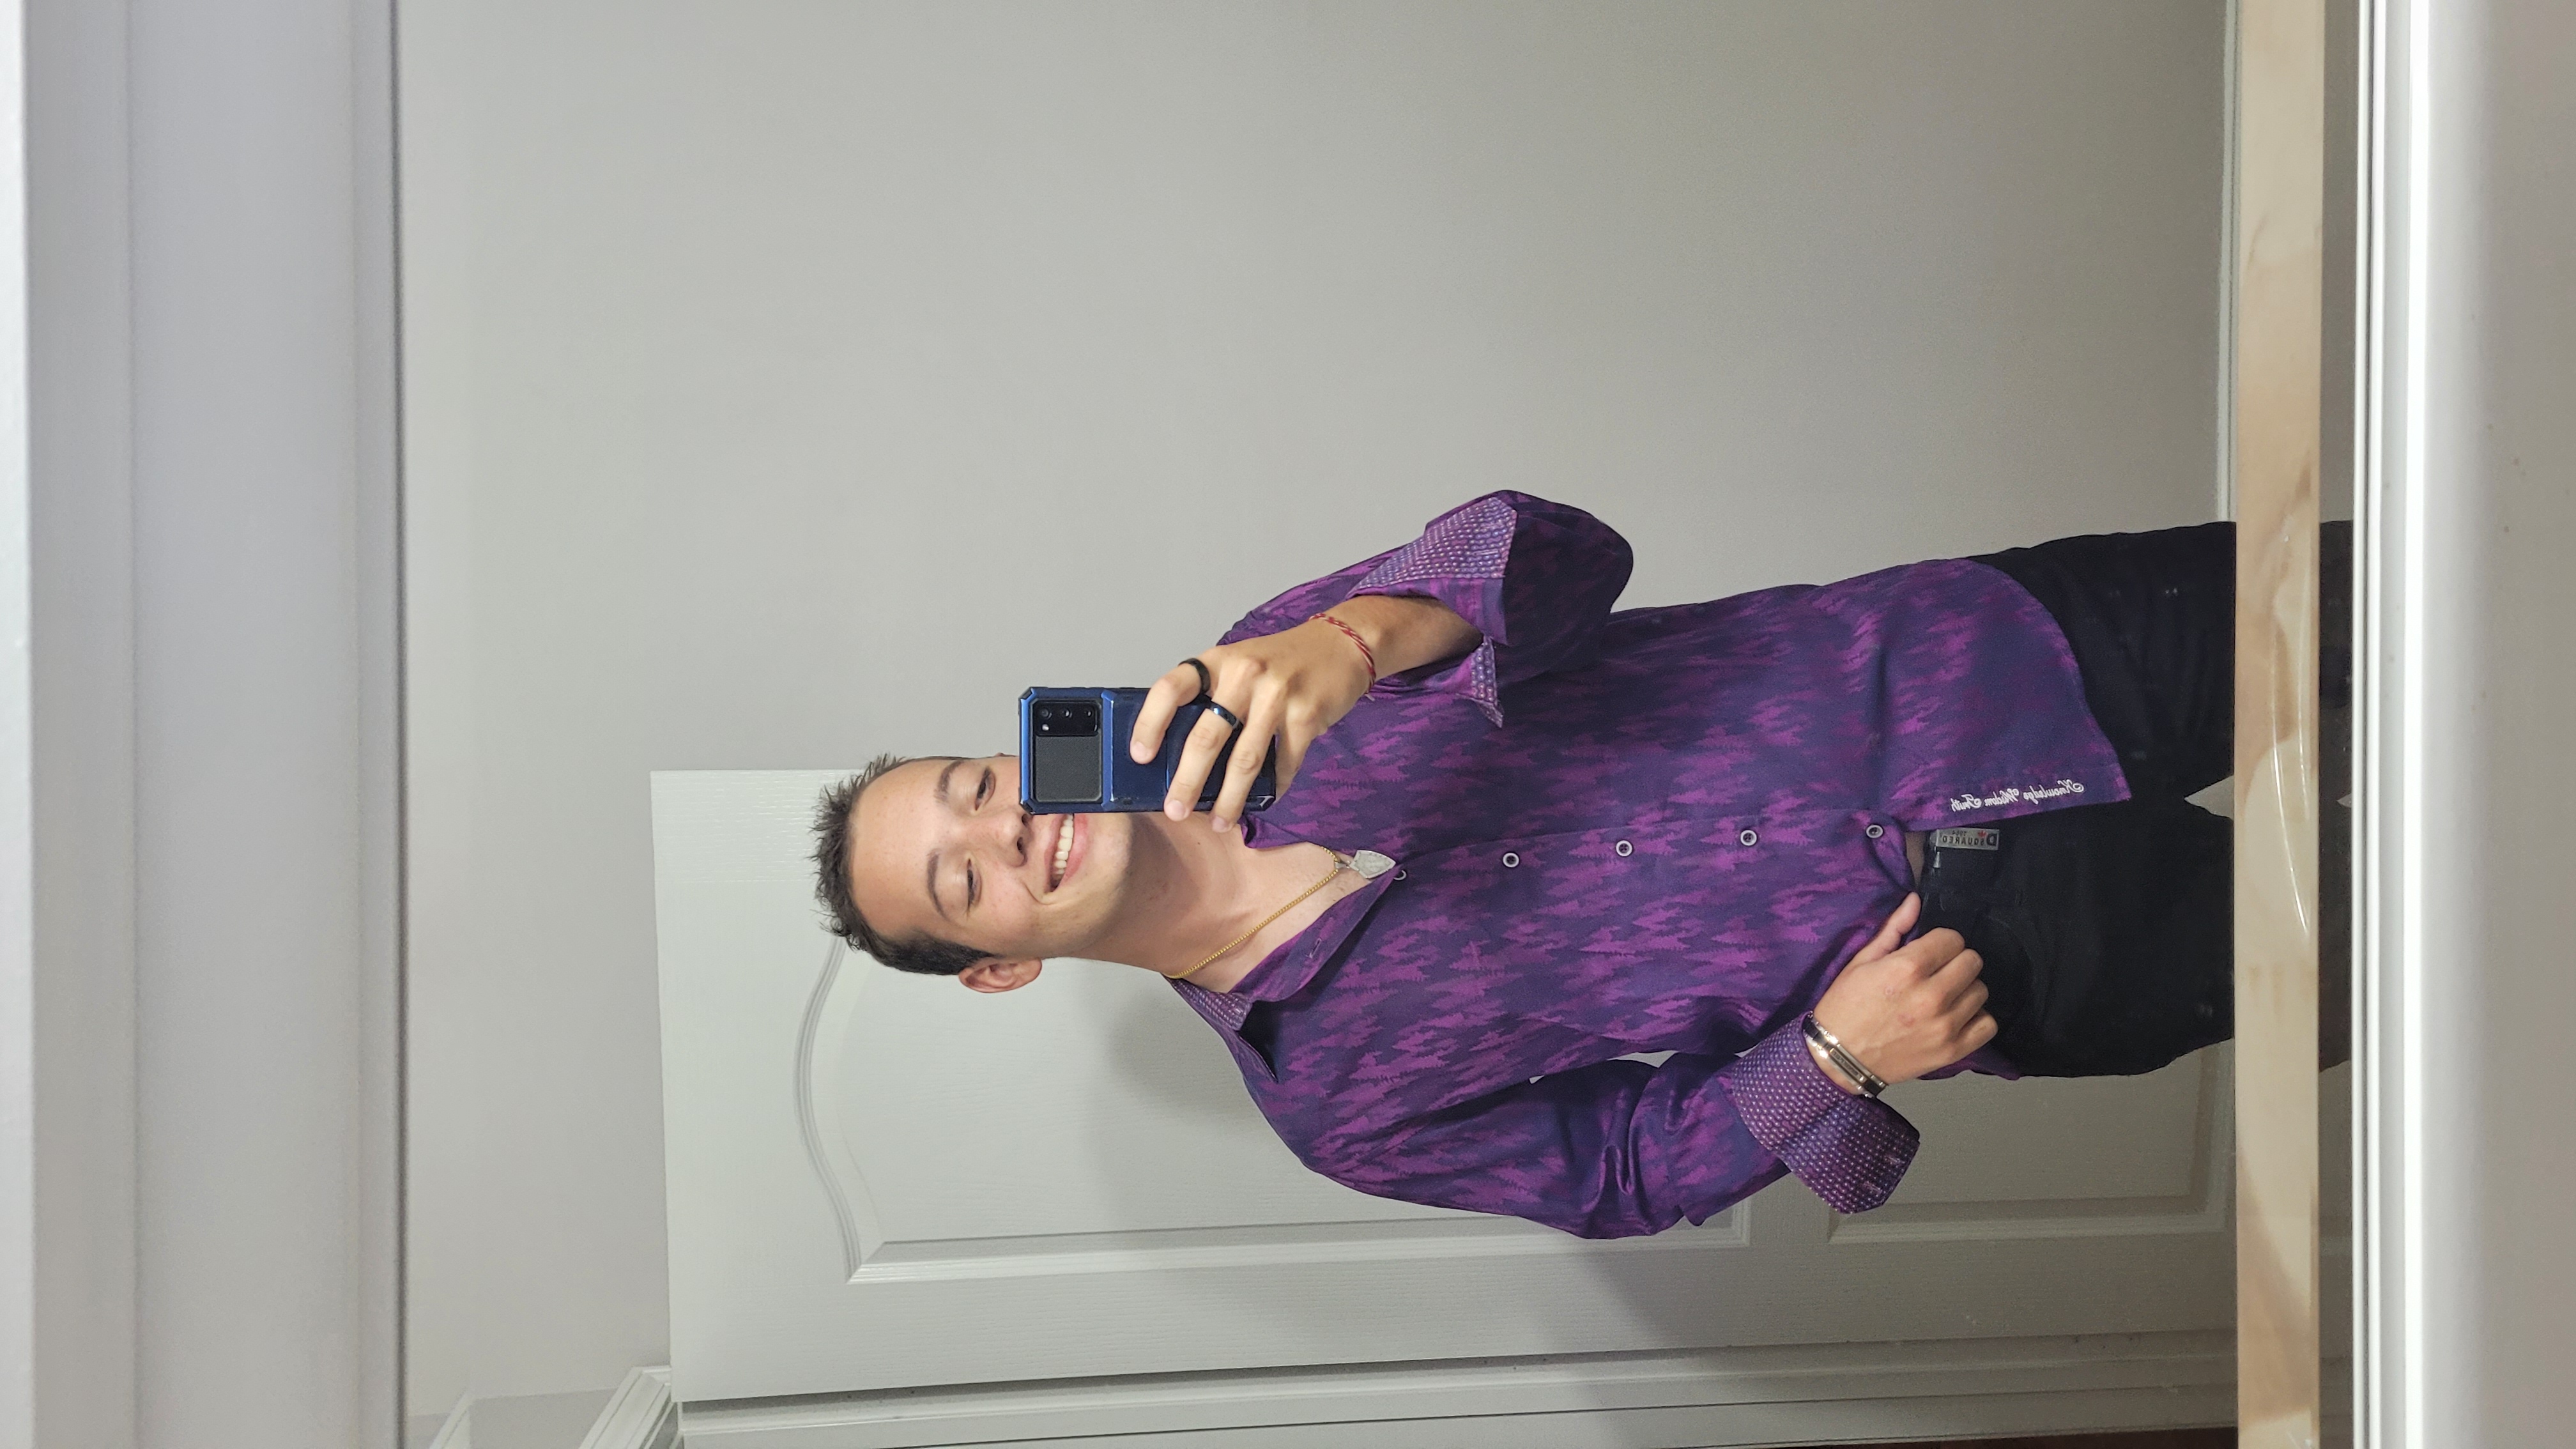 Ivans mirror selfie with a nice purple button down.